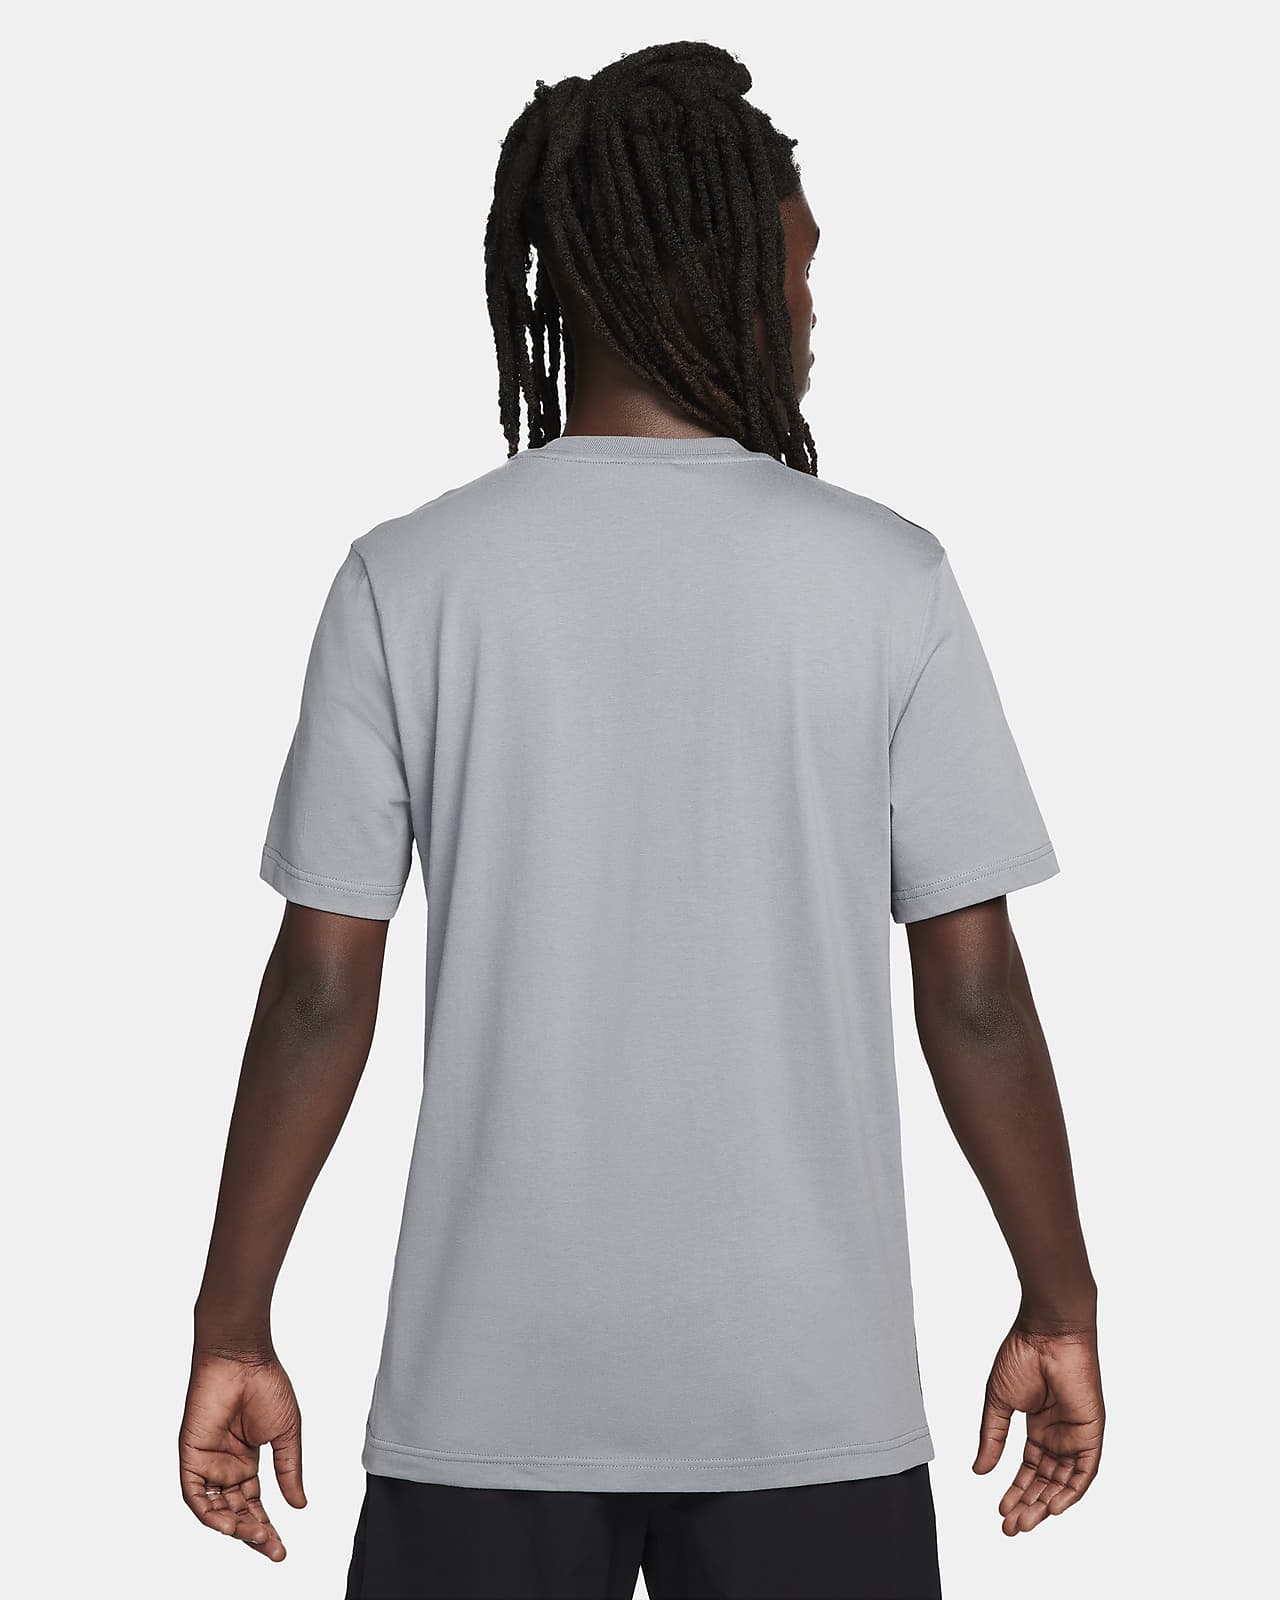 Nike T-shirt Air Max à manches courtes pour homme, taille S, blanc, L :  : Mode